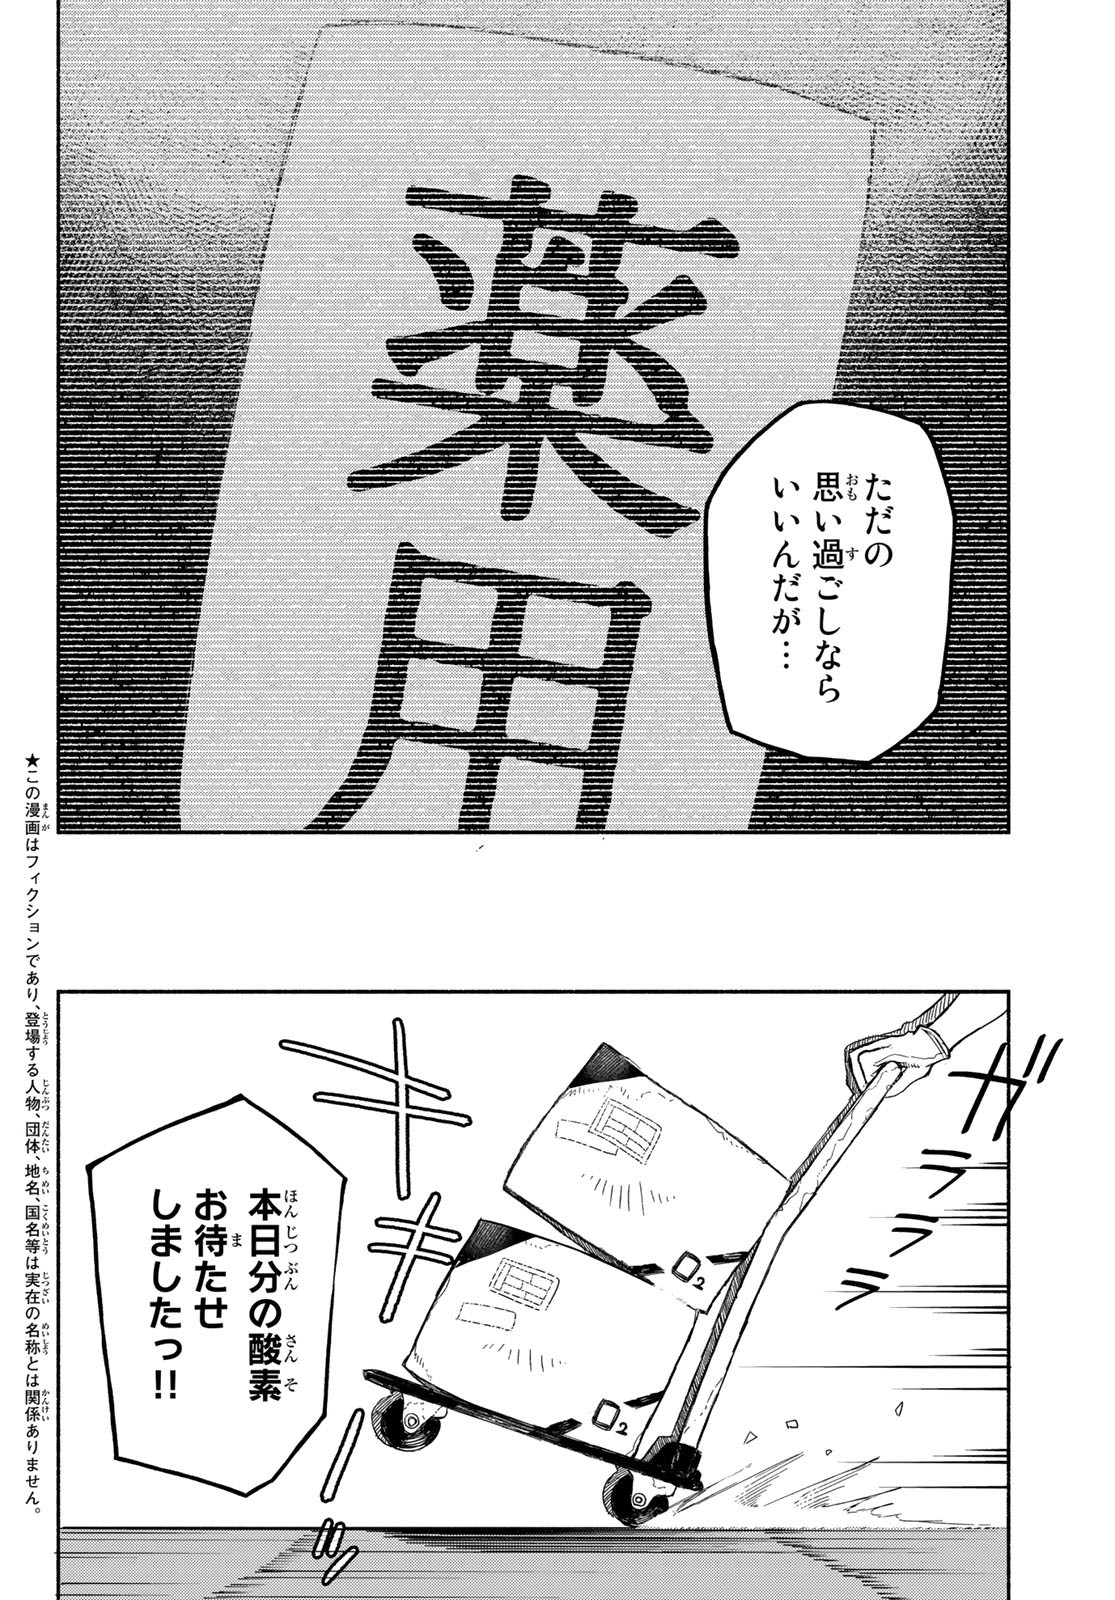 Hataraku Saibou Okusuri - Chapter 1 - Page 3